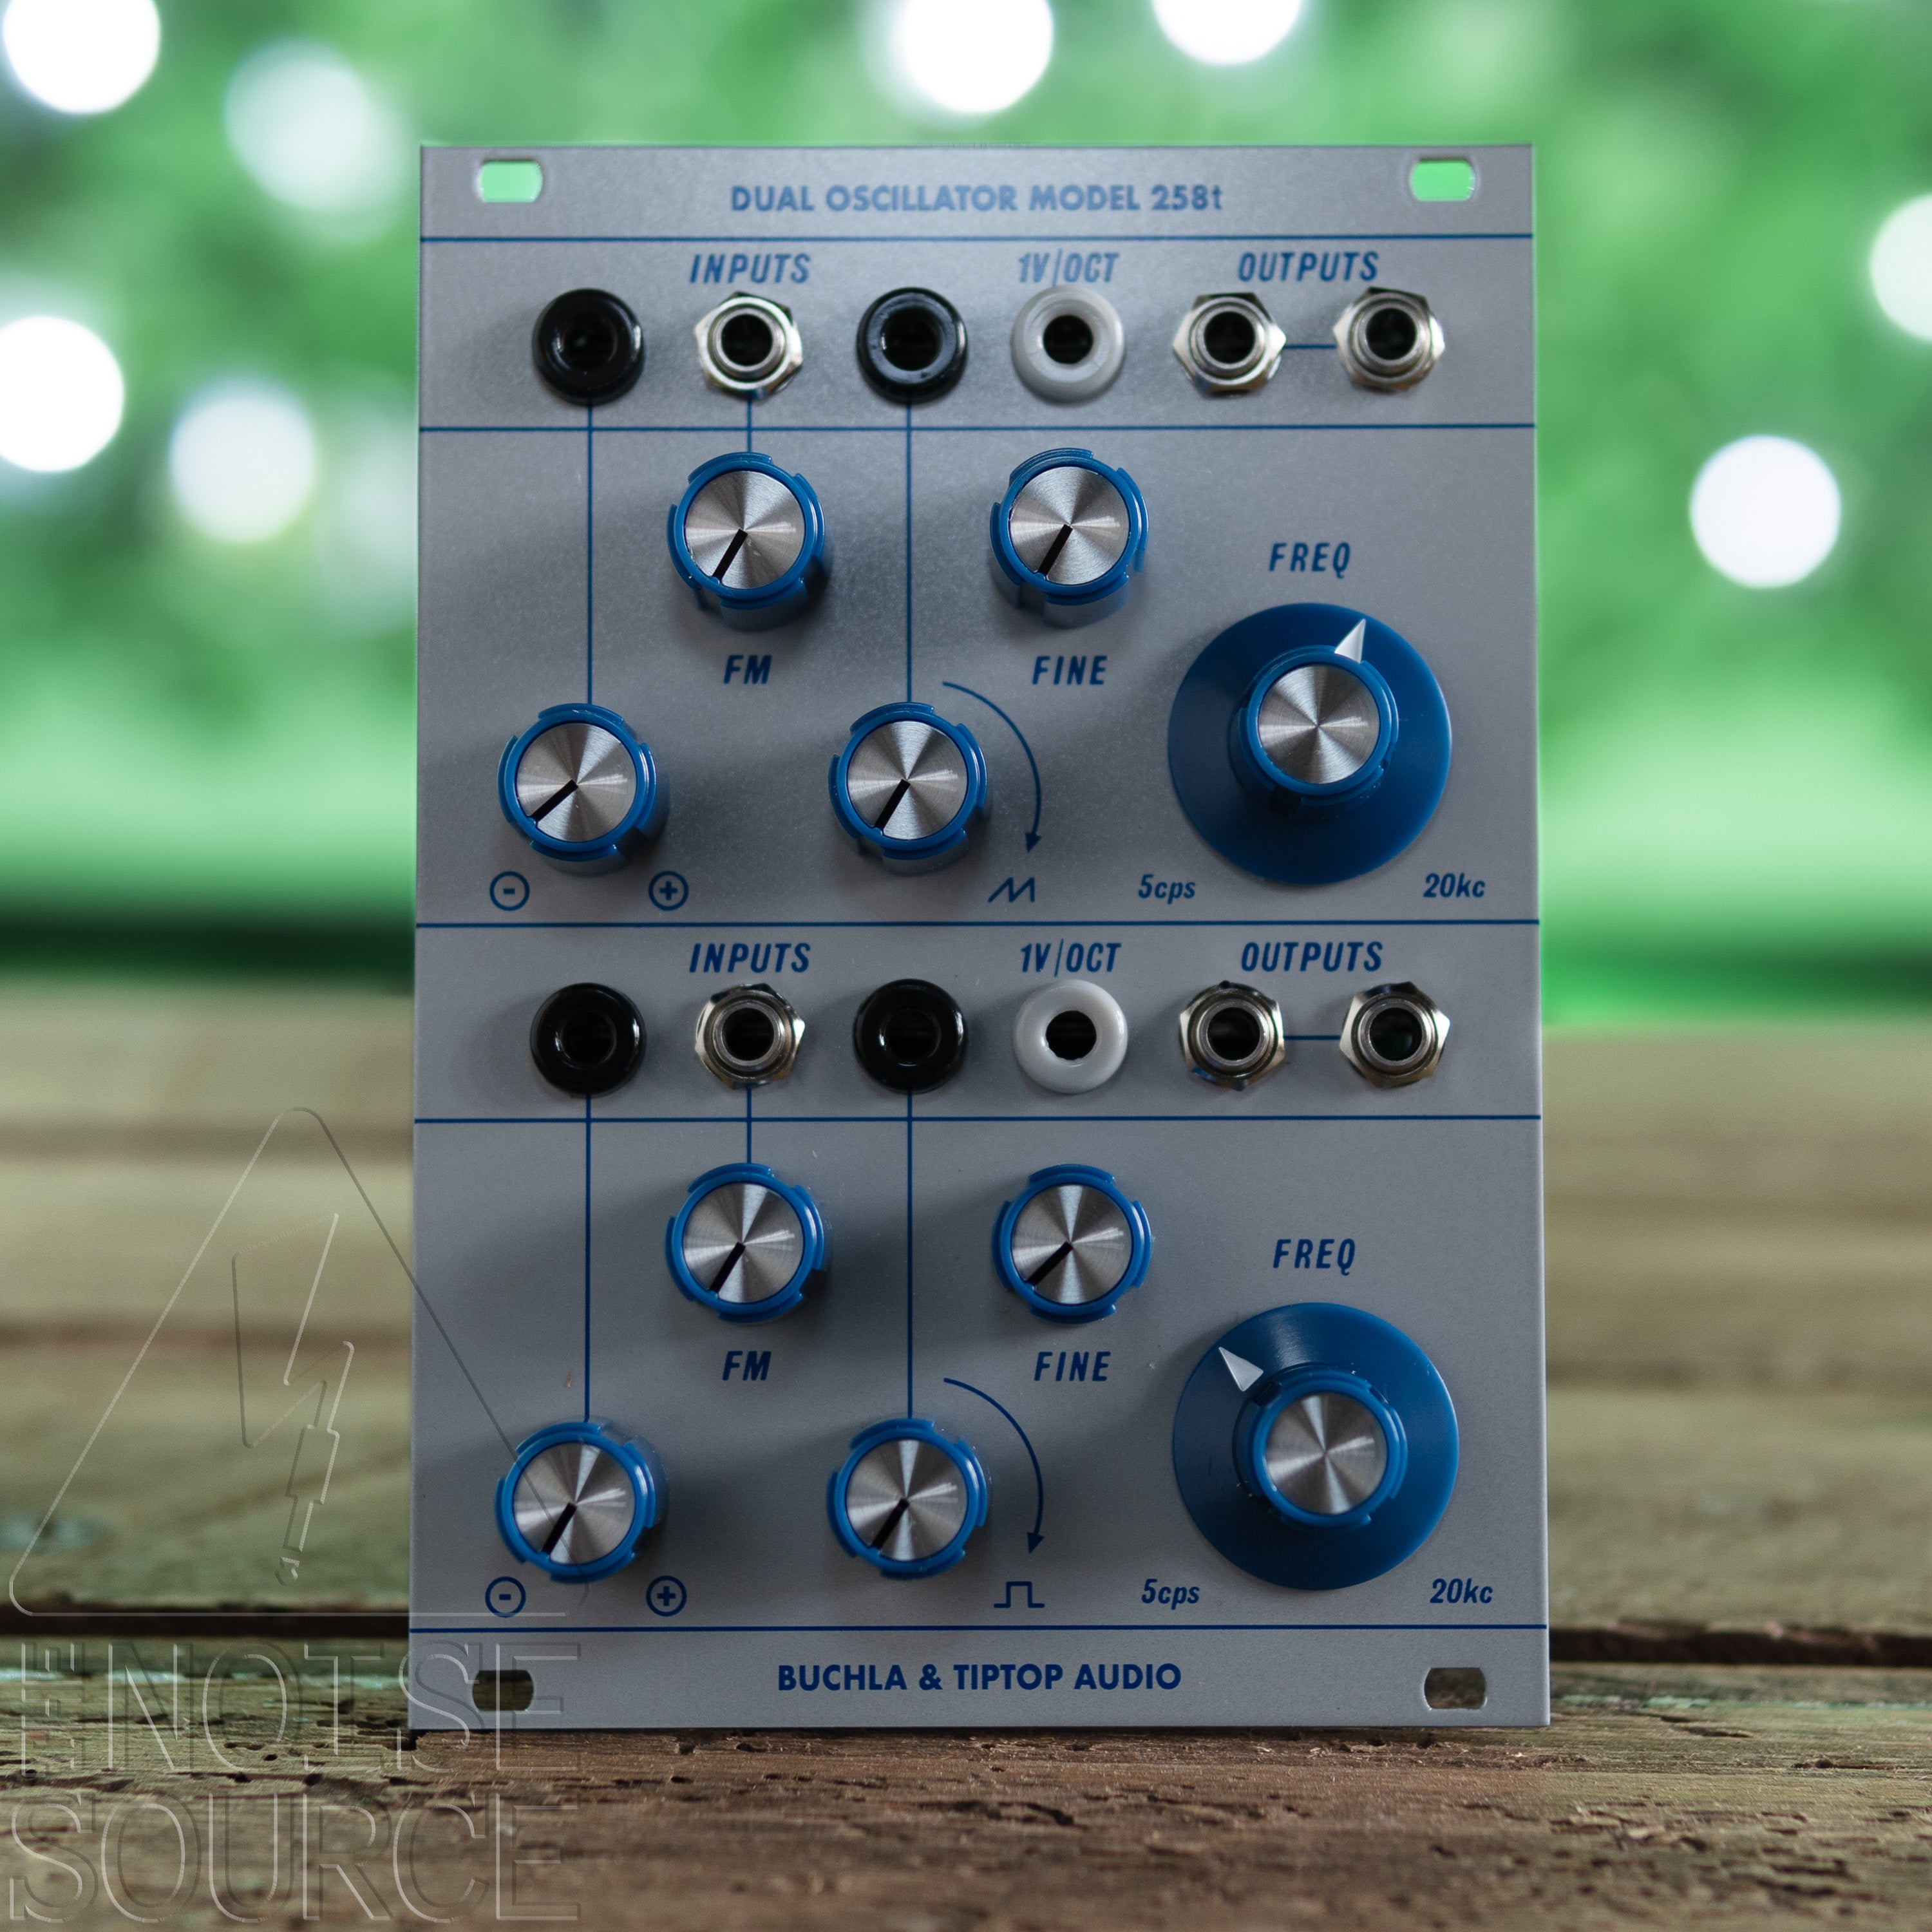 Tiptop Audio Buchla 258t Dual Oscillator – The Noise Source